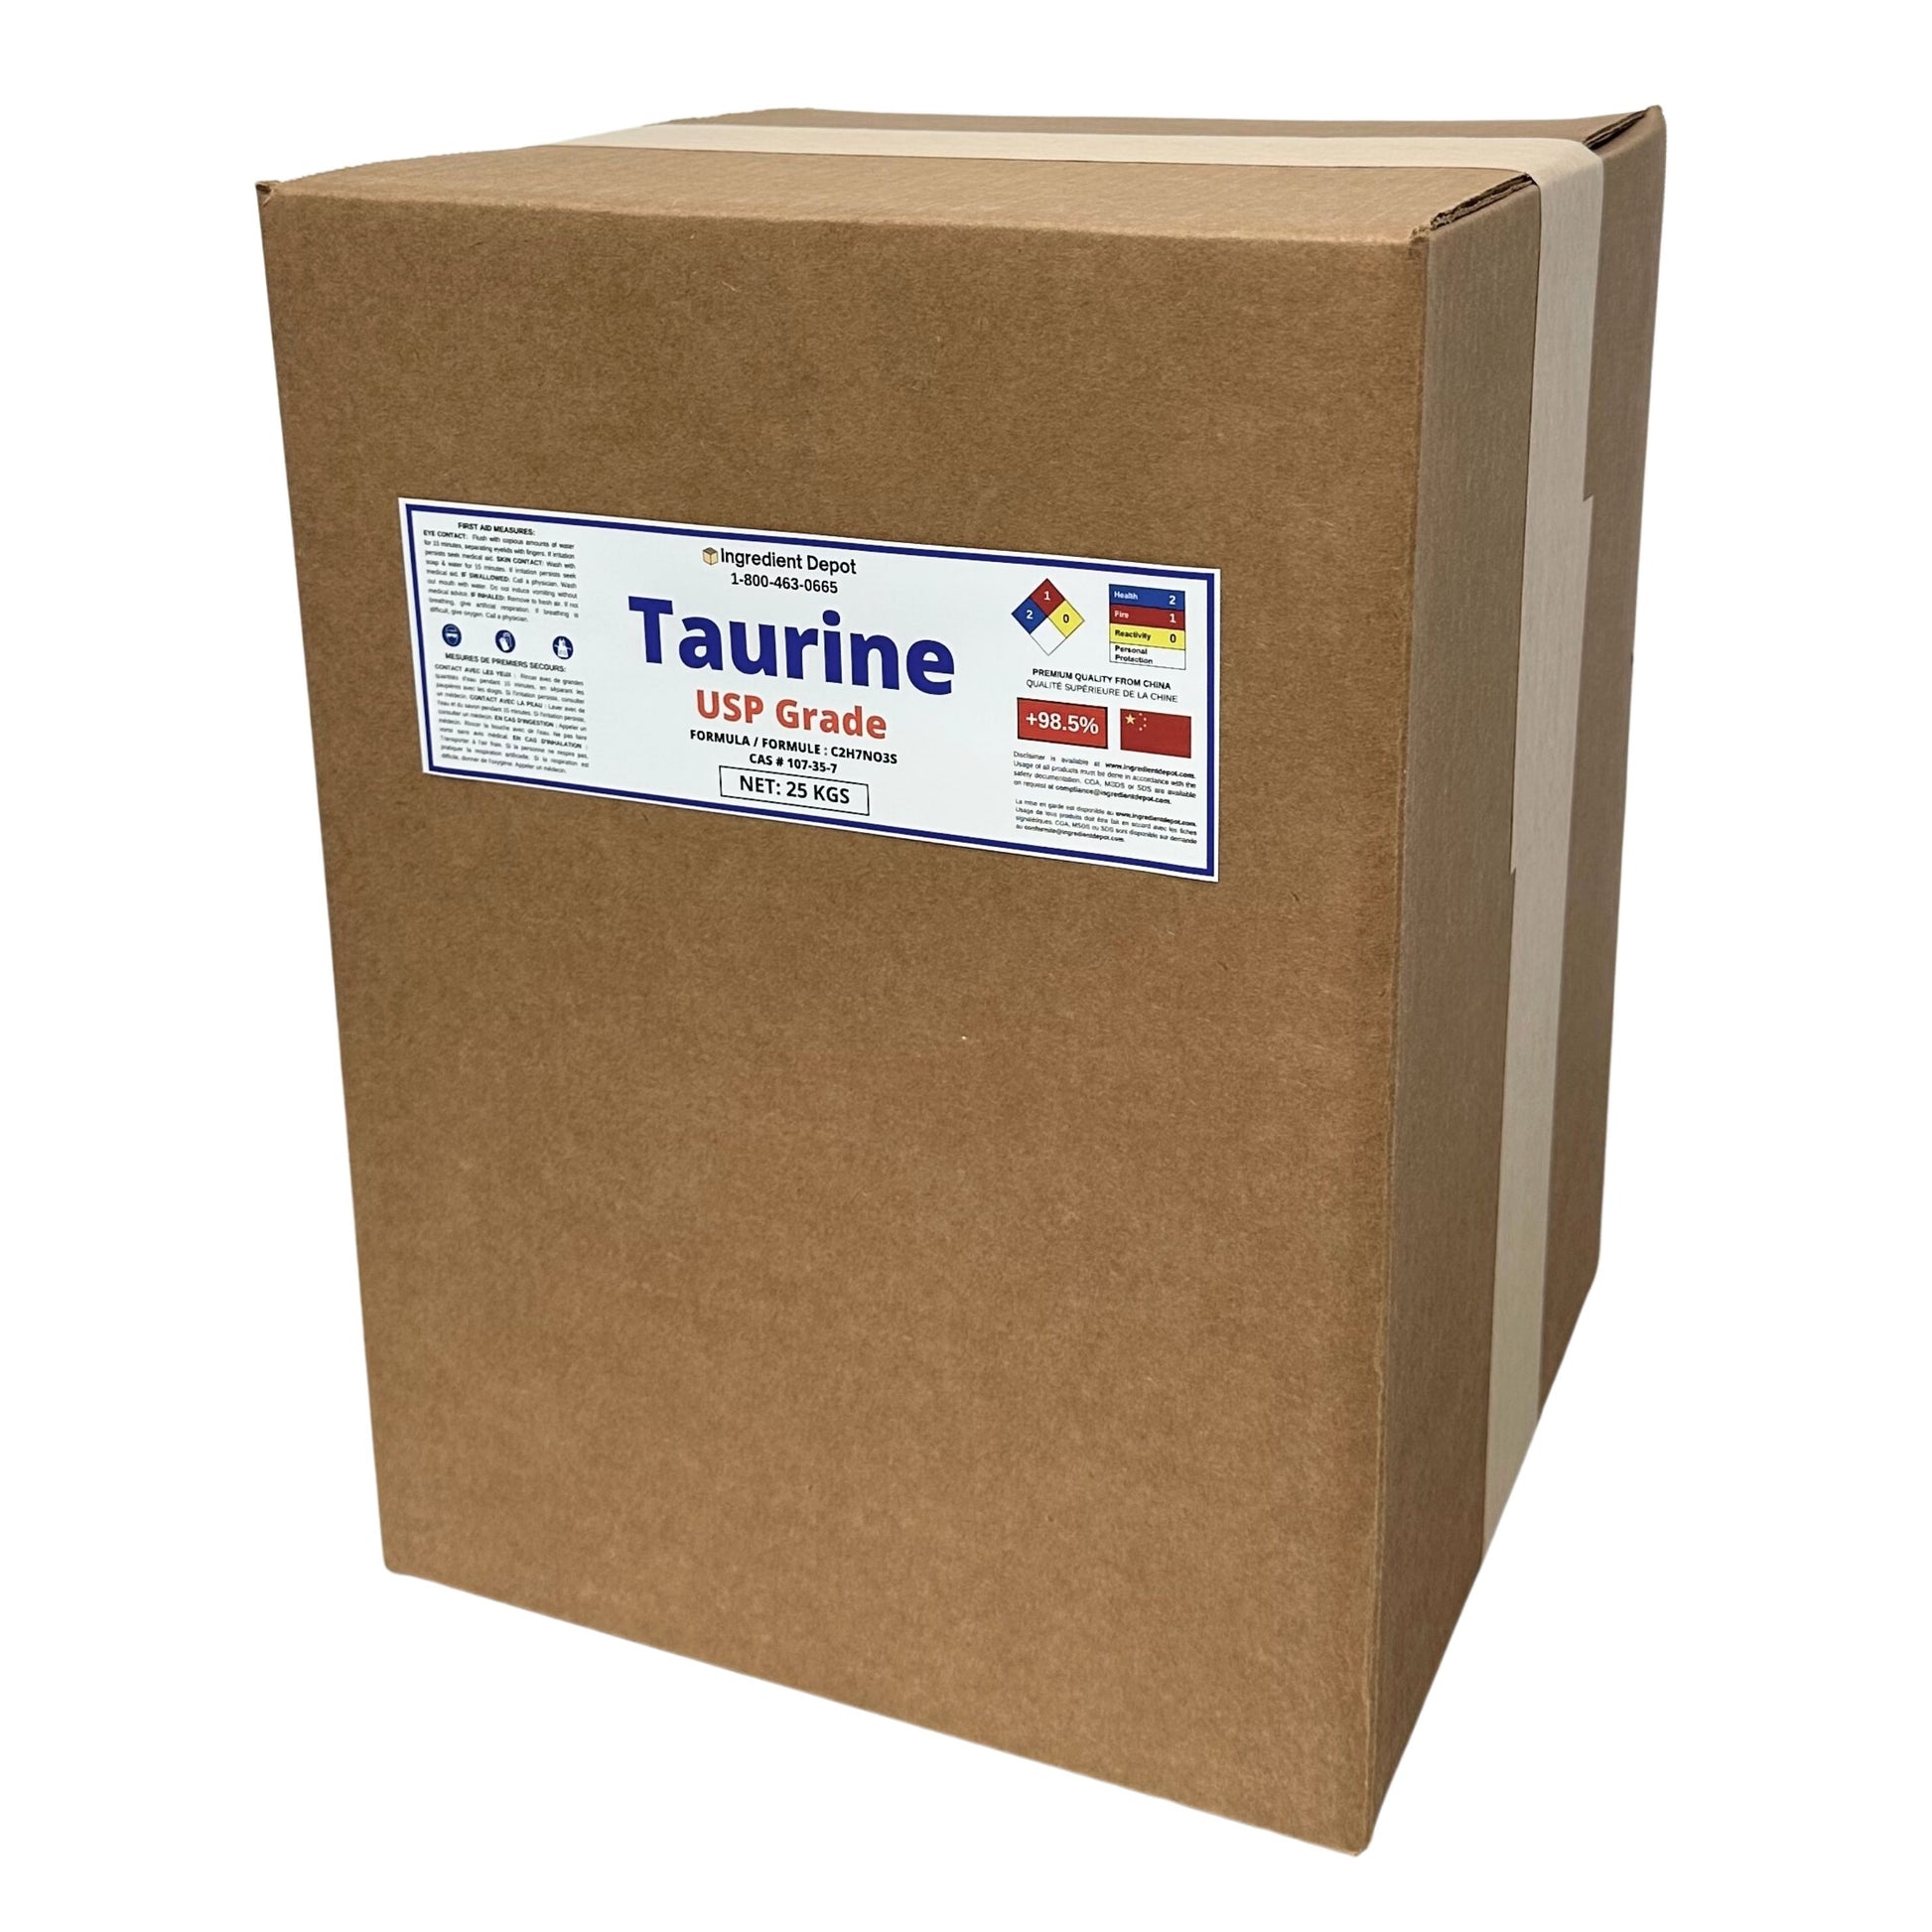 Taurine Powder 25 kgs - IngredientDepot.com